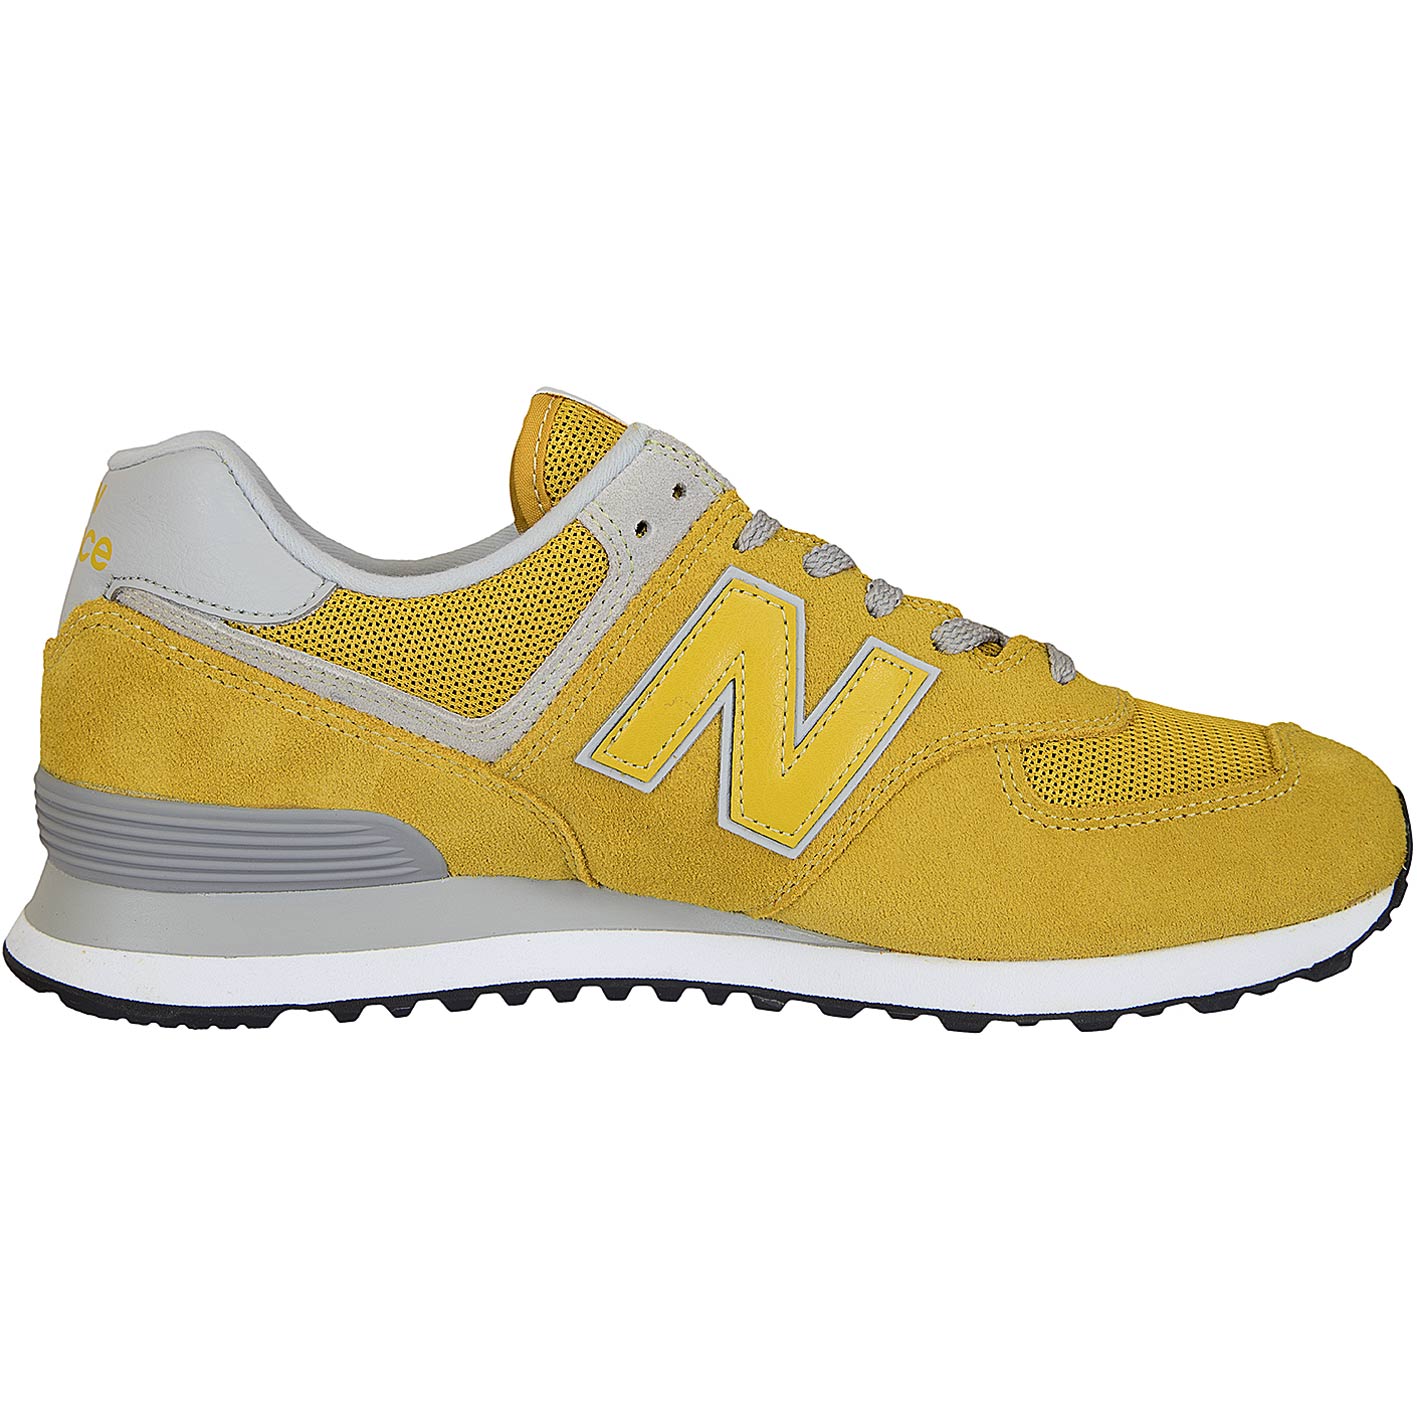 ☆ New Balance Sneaker 574 Wildleder/Mesh/Synthetik gelb - hier bestellen!